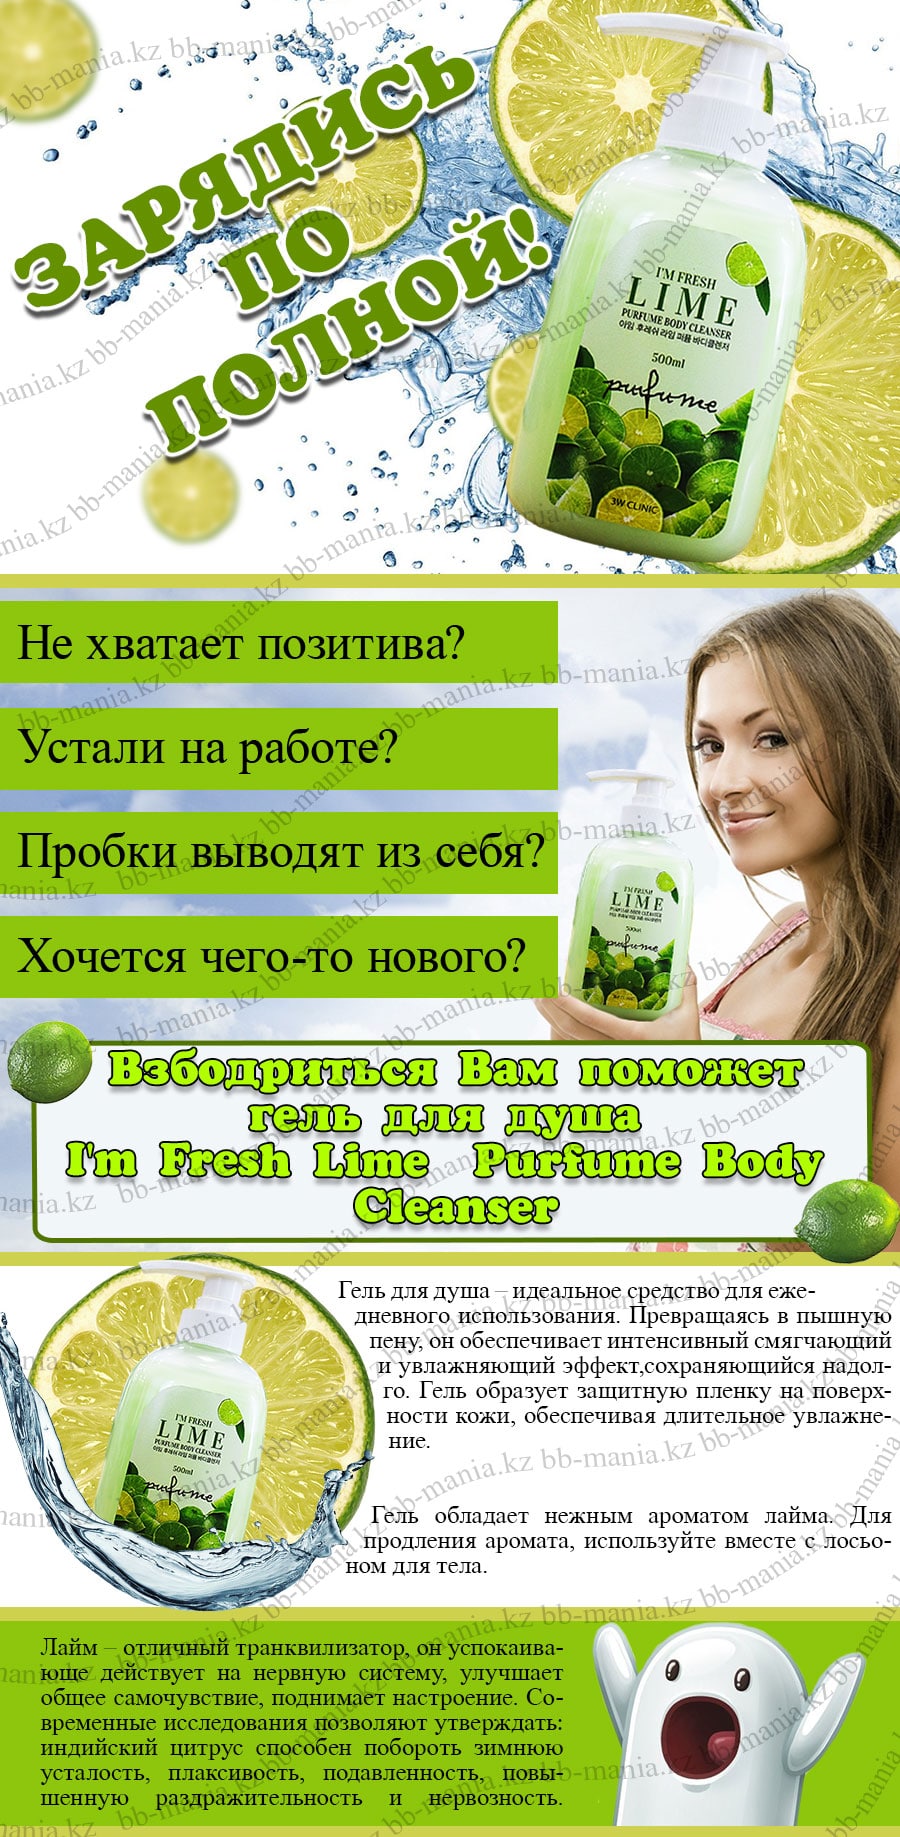 Im-Fresh-Lime-Purfume-Body-Cleanser-min